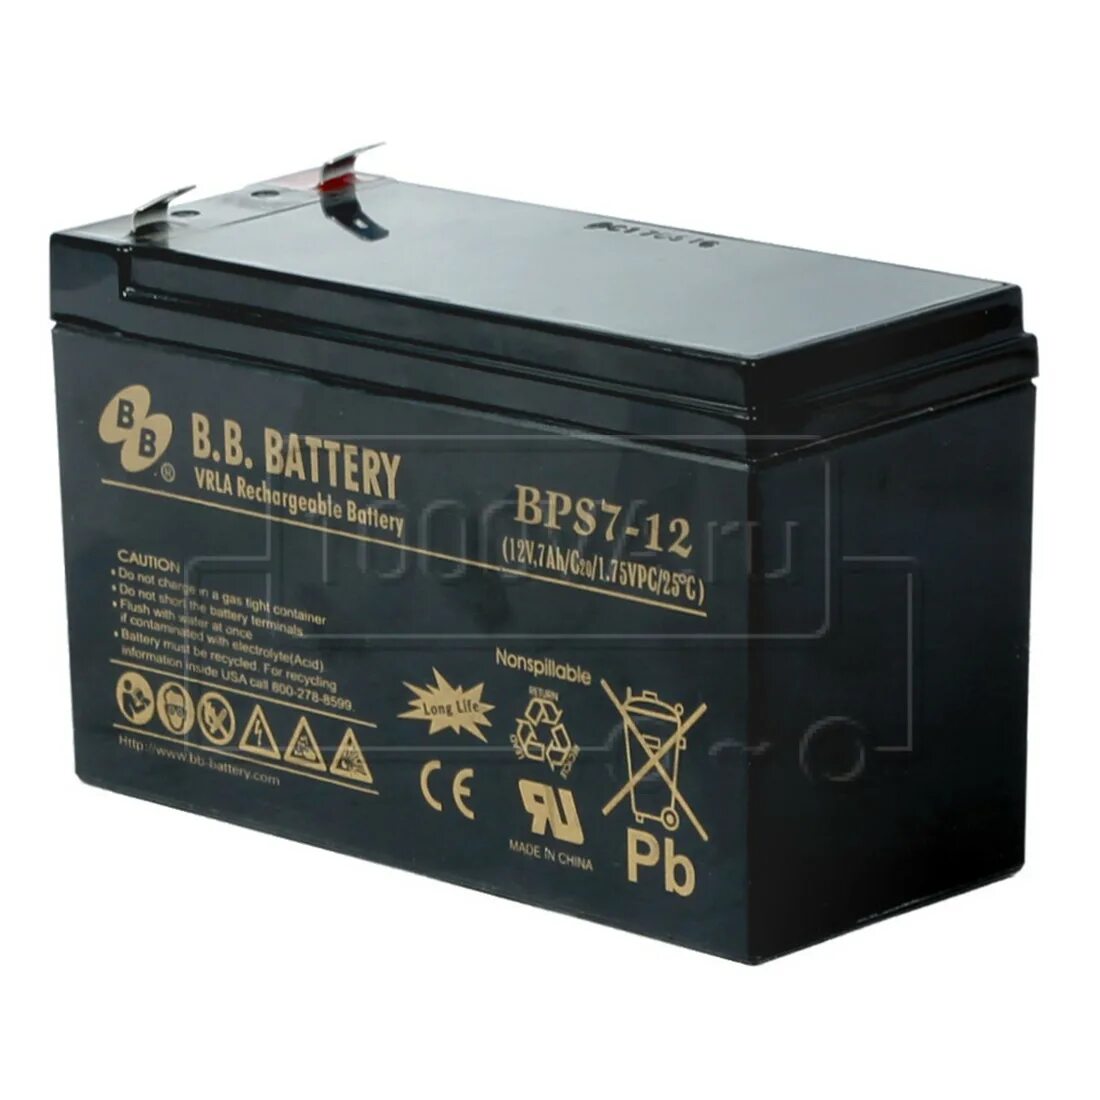 Ip battery. Аккумулятор BB.Battery bps7-12 12в 7ач. BPS 100-12 аккумулятор. Аккумуляторная батарея b.b.Battery bps7-12, 12v, 7ah. Аккумуляторная батарея BB Battery BPS 100-12.